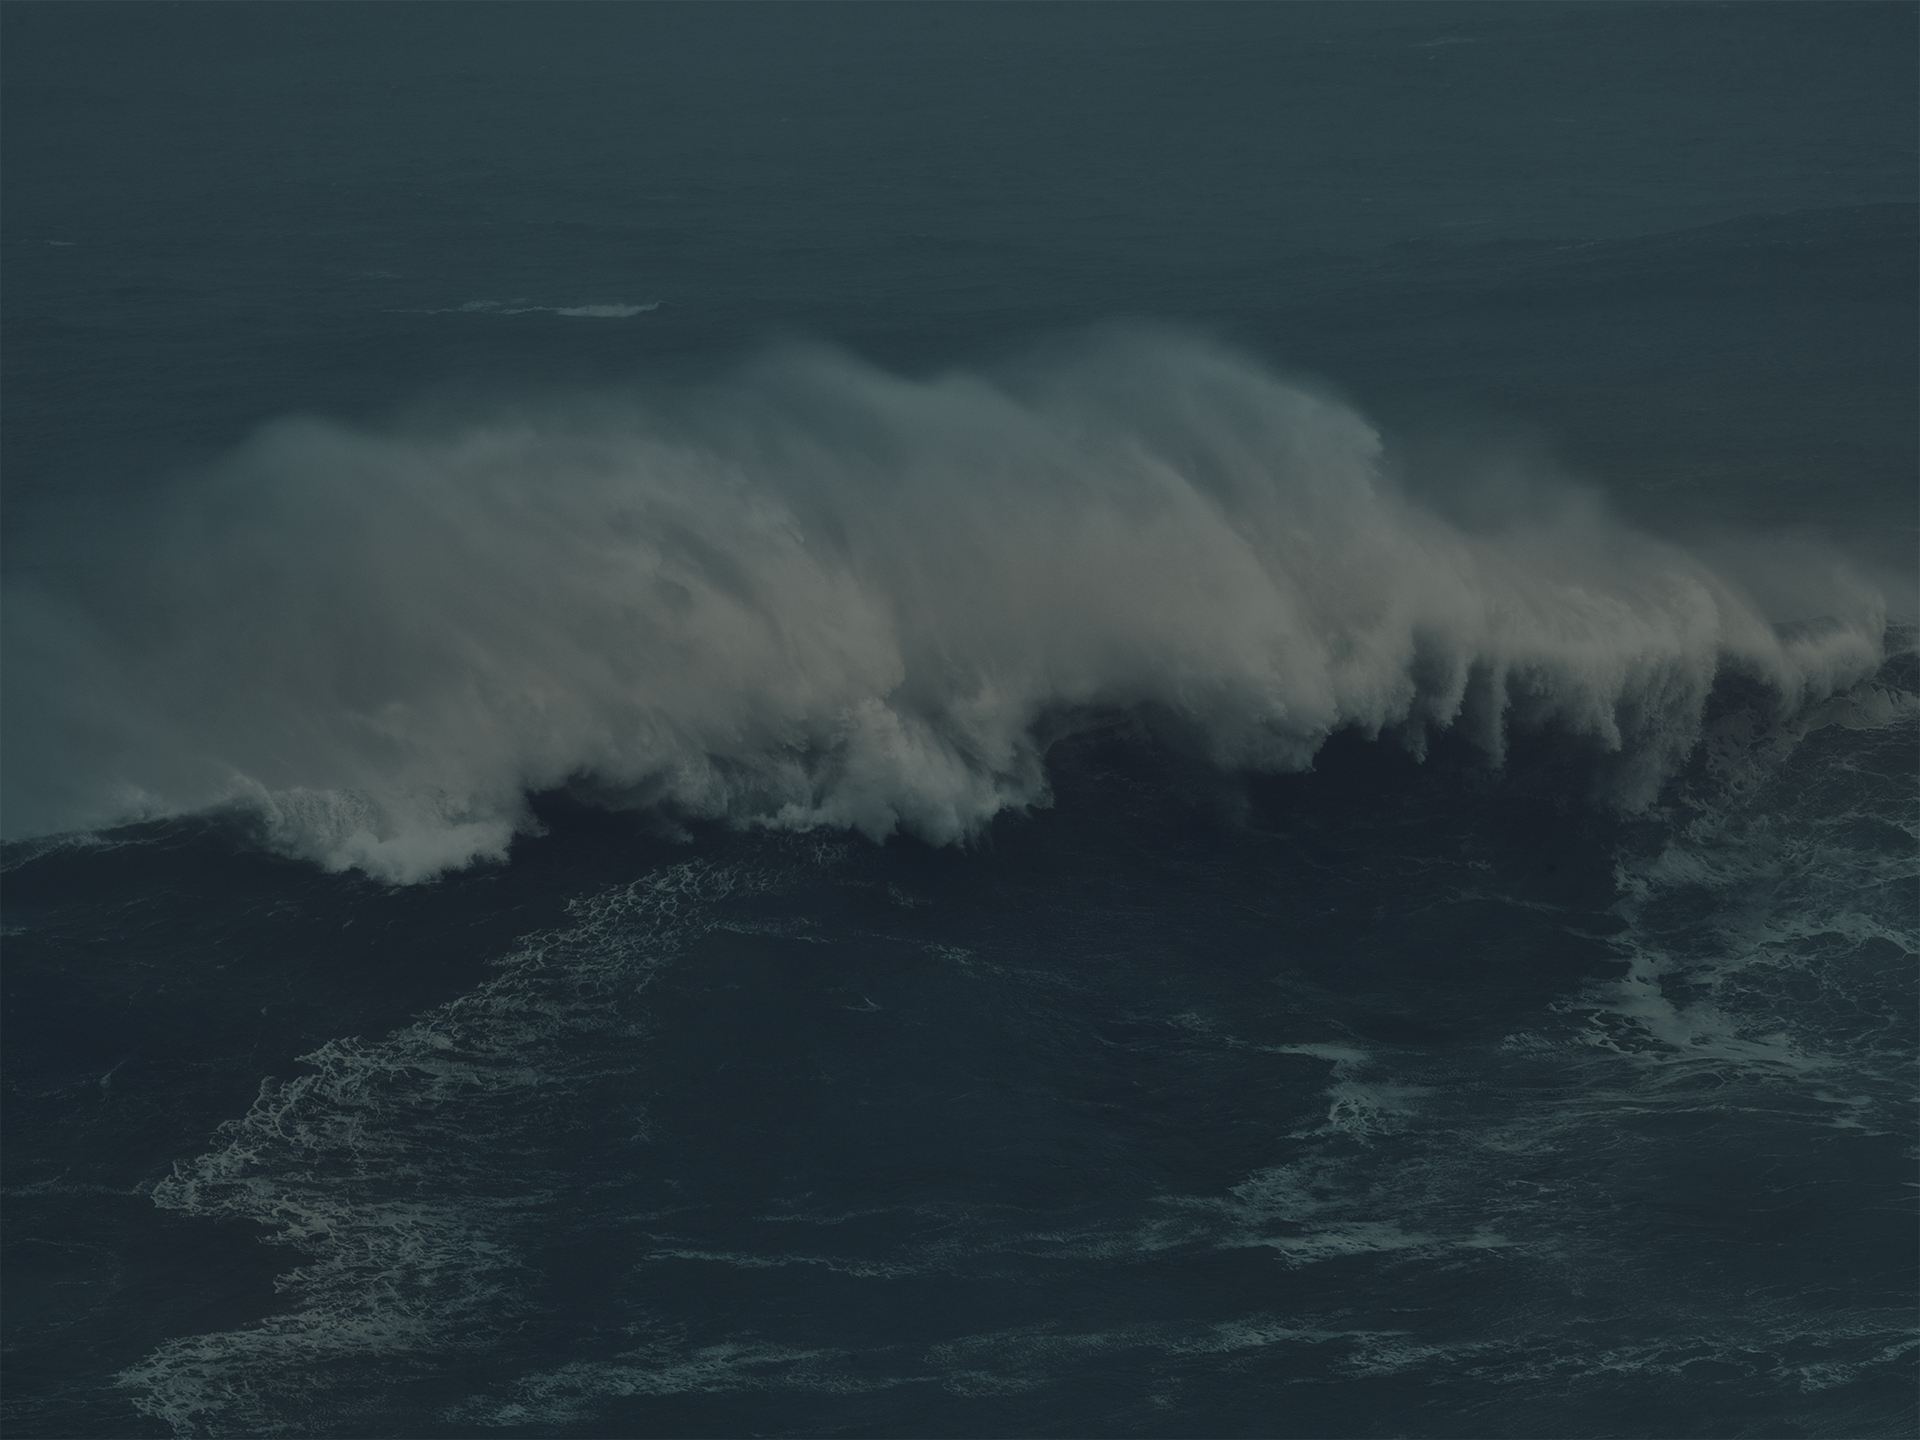 wellen, waves, landscape, water, sea, anke luckmann, nazare, portugal